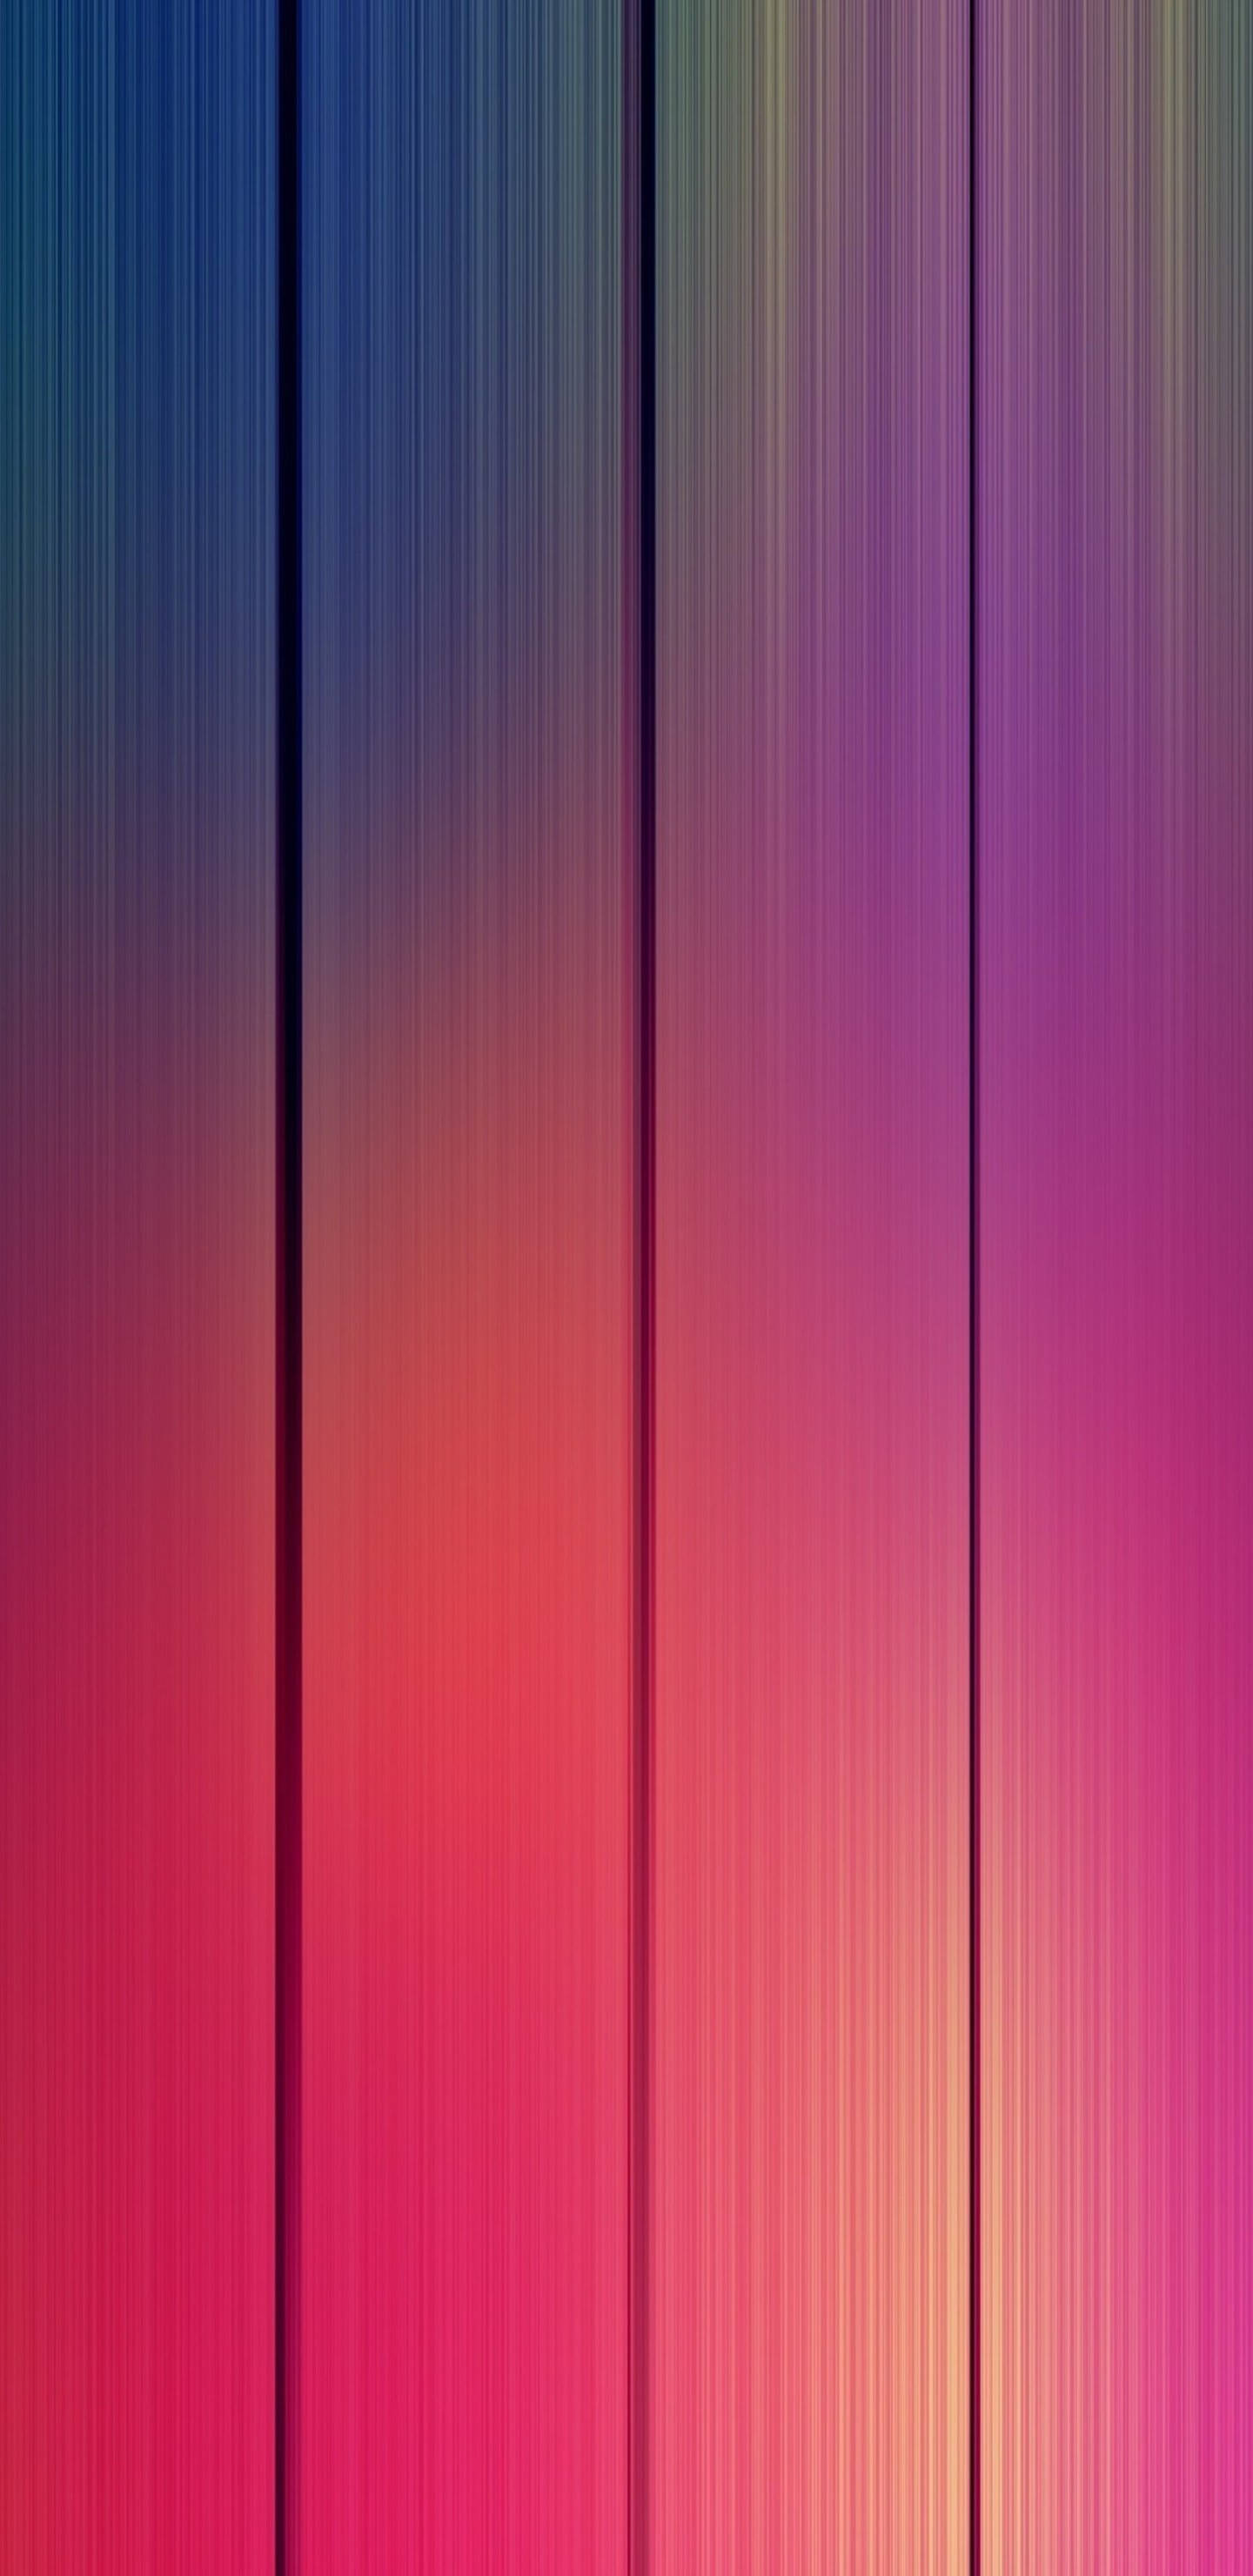 Download Pixel 3 Xl Colorful Wood Panels Wallpaper 